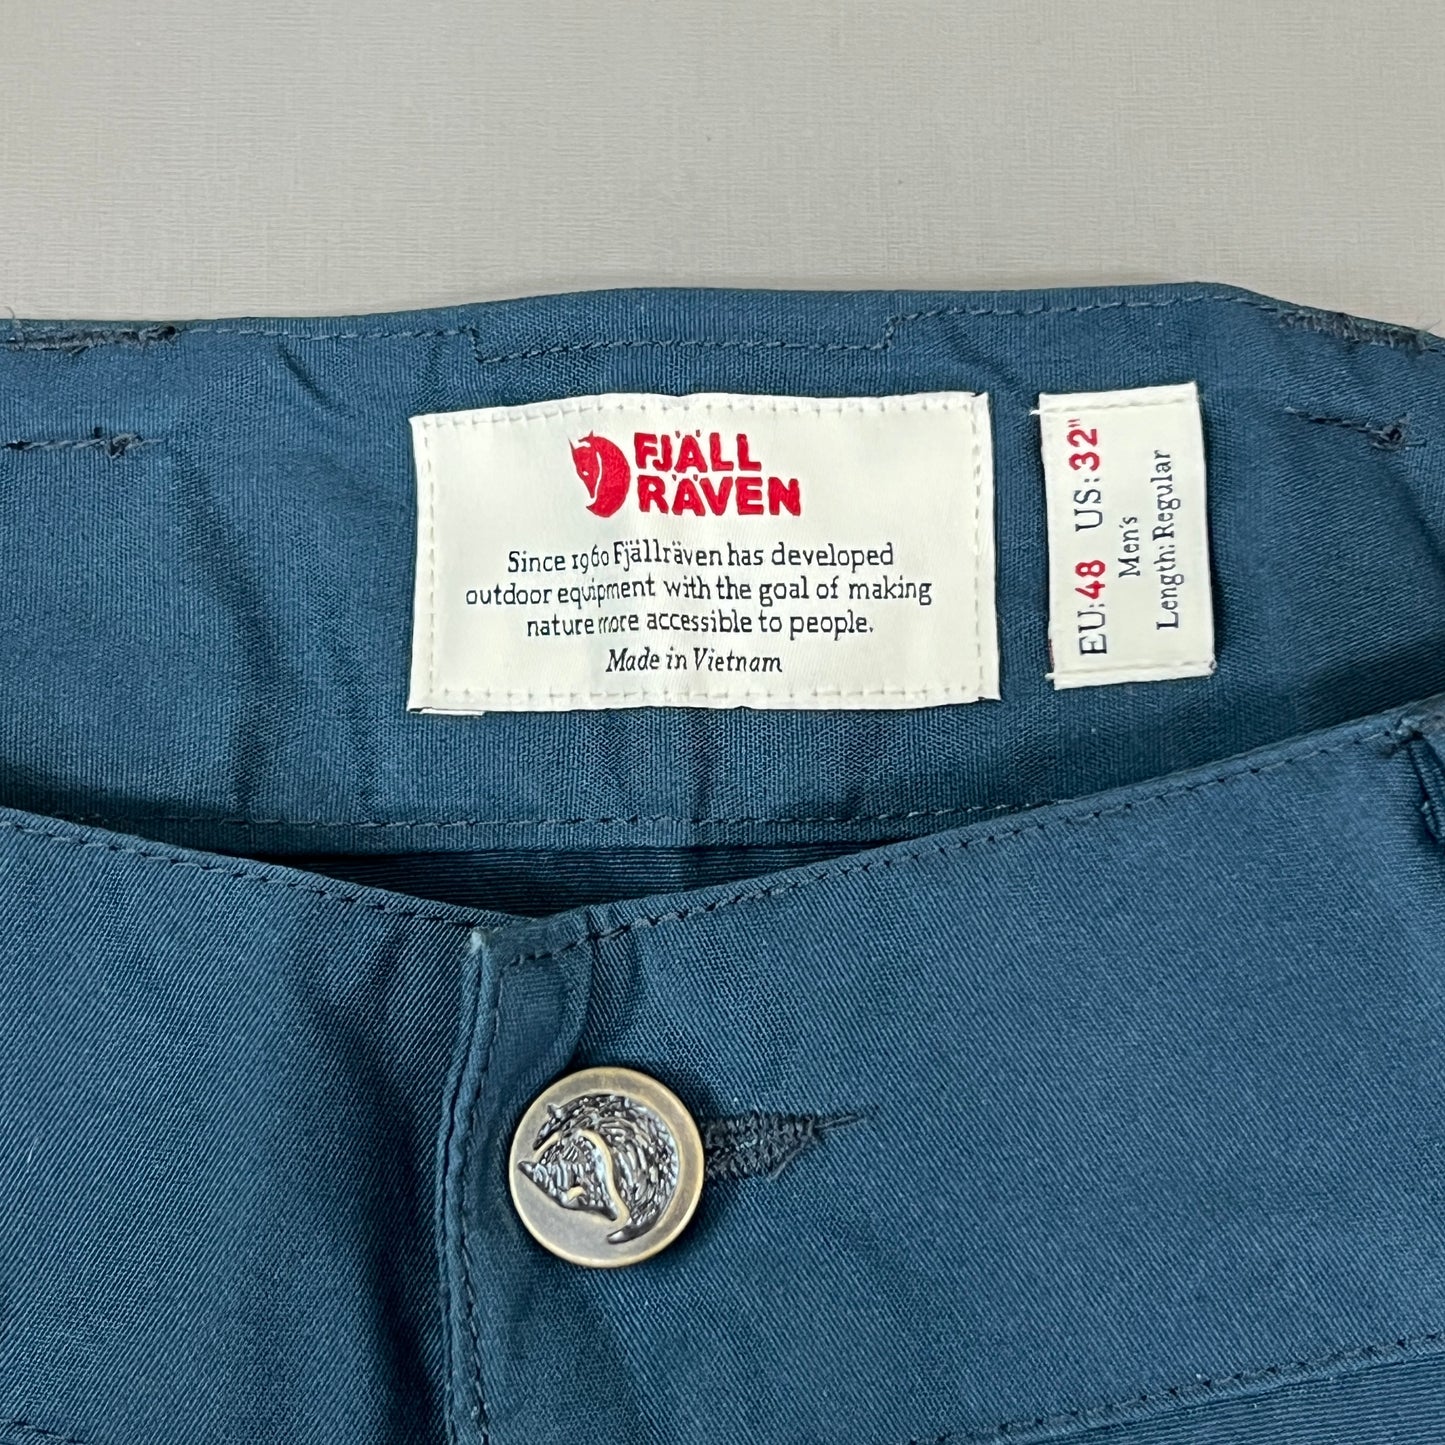 FJALLRAVEN Vidda Pro Ventilated Pants Men's Sz US 32 EUR 48 Mountain Blue (New)